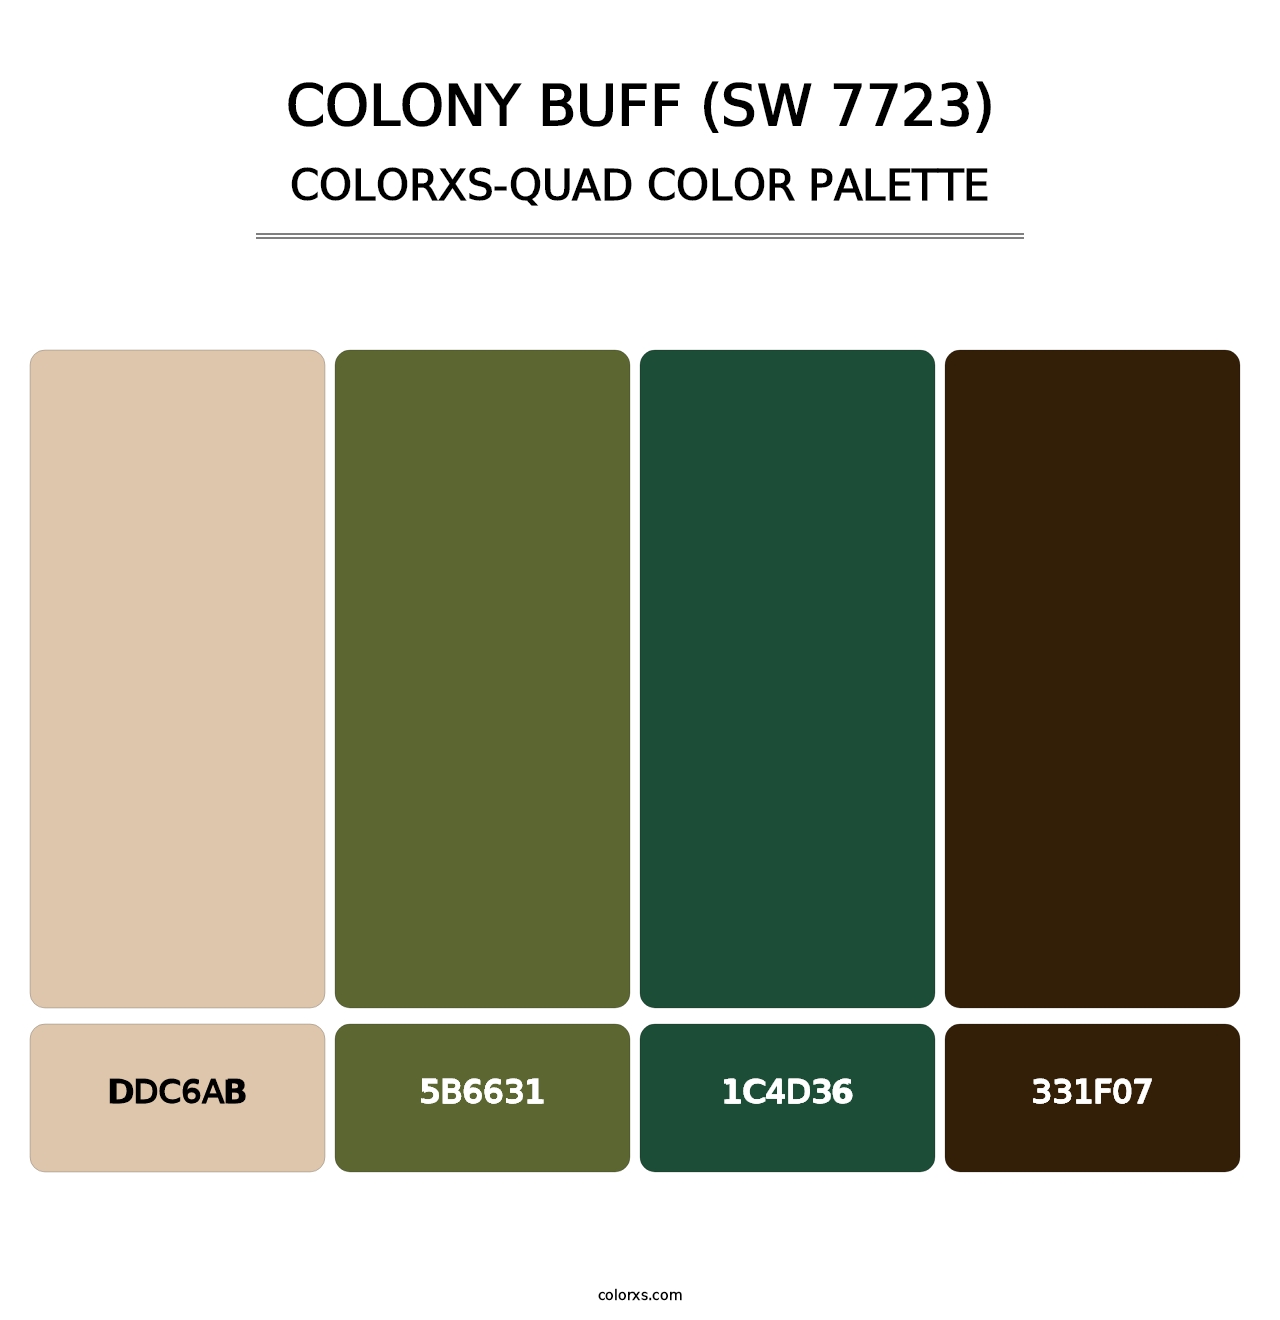 Colony Buff (SW 7723) - Colorxs Quad Palette